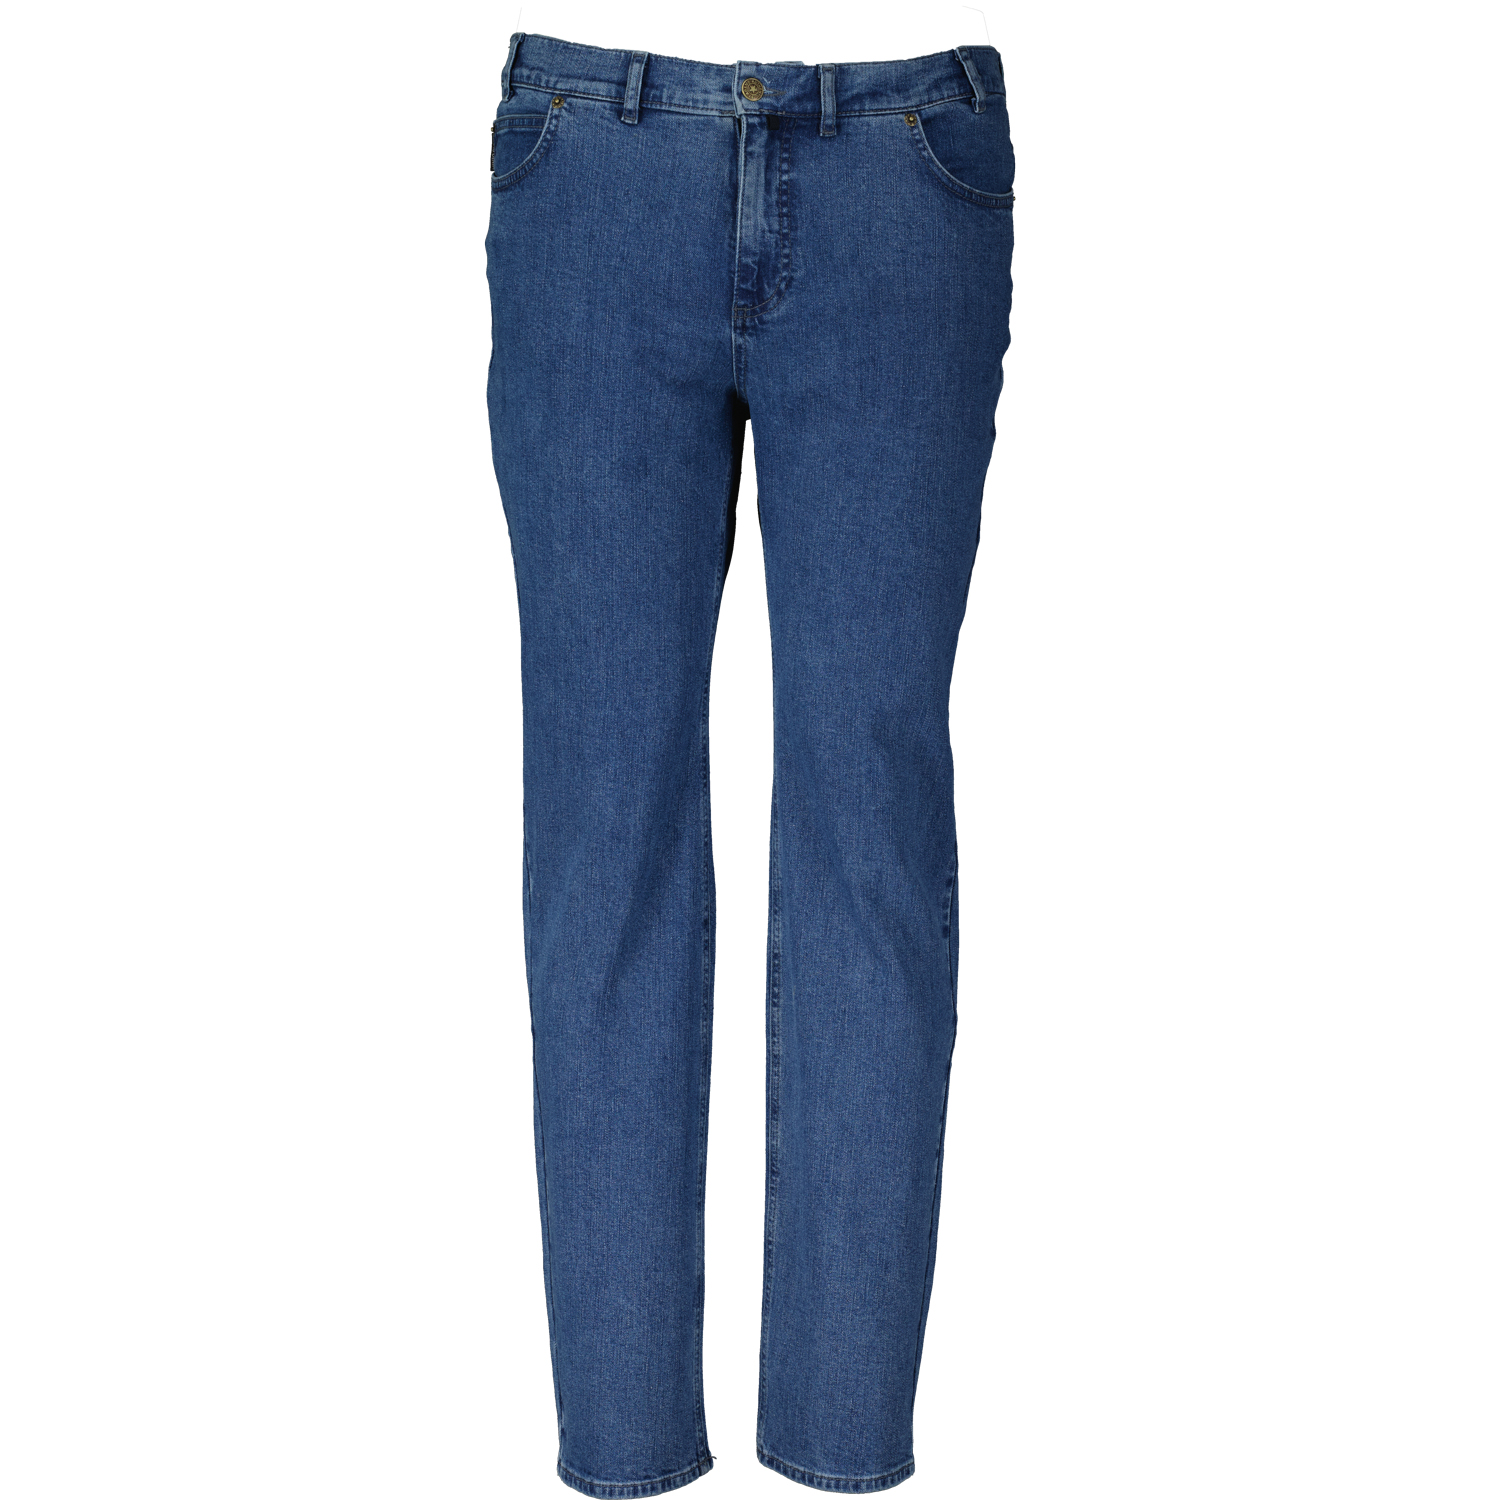 5-Pocket Jeans homme avec stretch série "NEVADA" bleu moyen by Adamo grandes tailles: 56 - 80